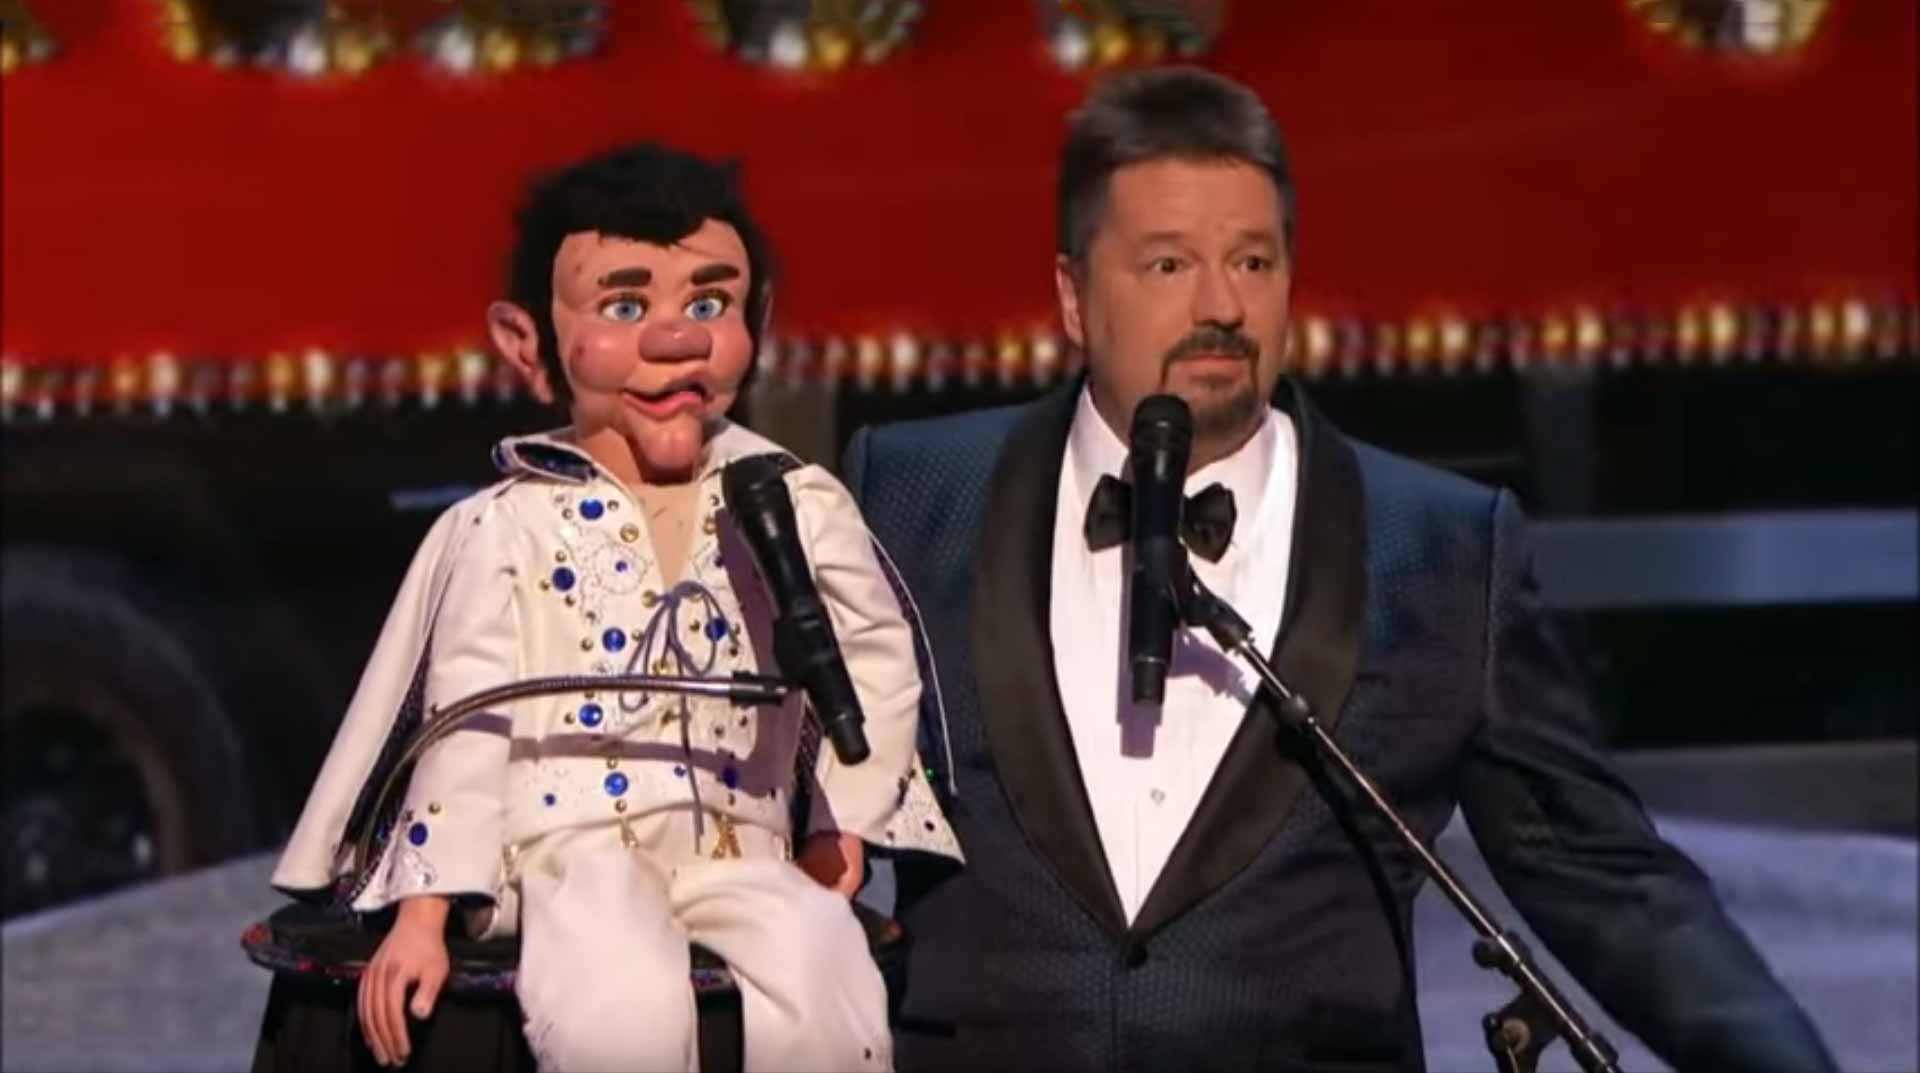 Ventriloquist Terry Fator Elvis Christmas Special America's Got Talent